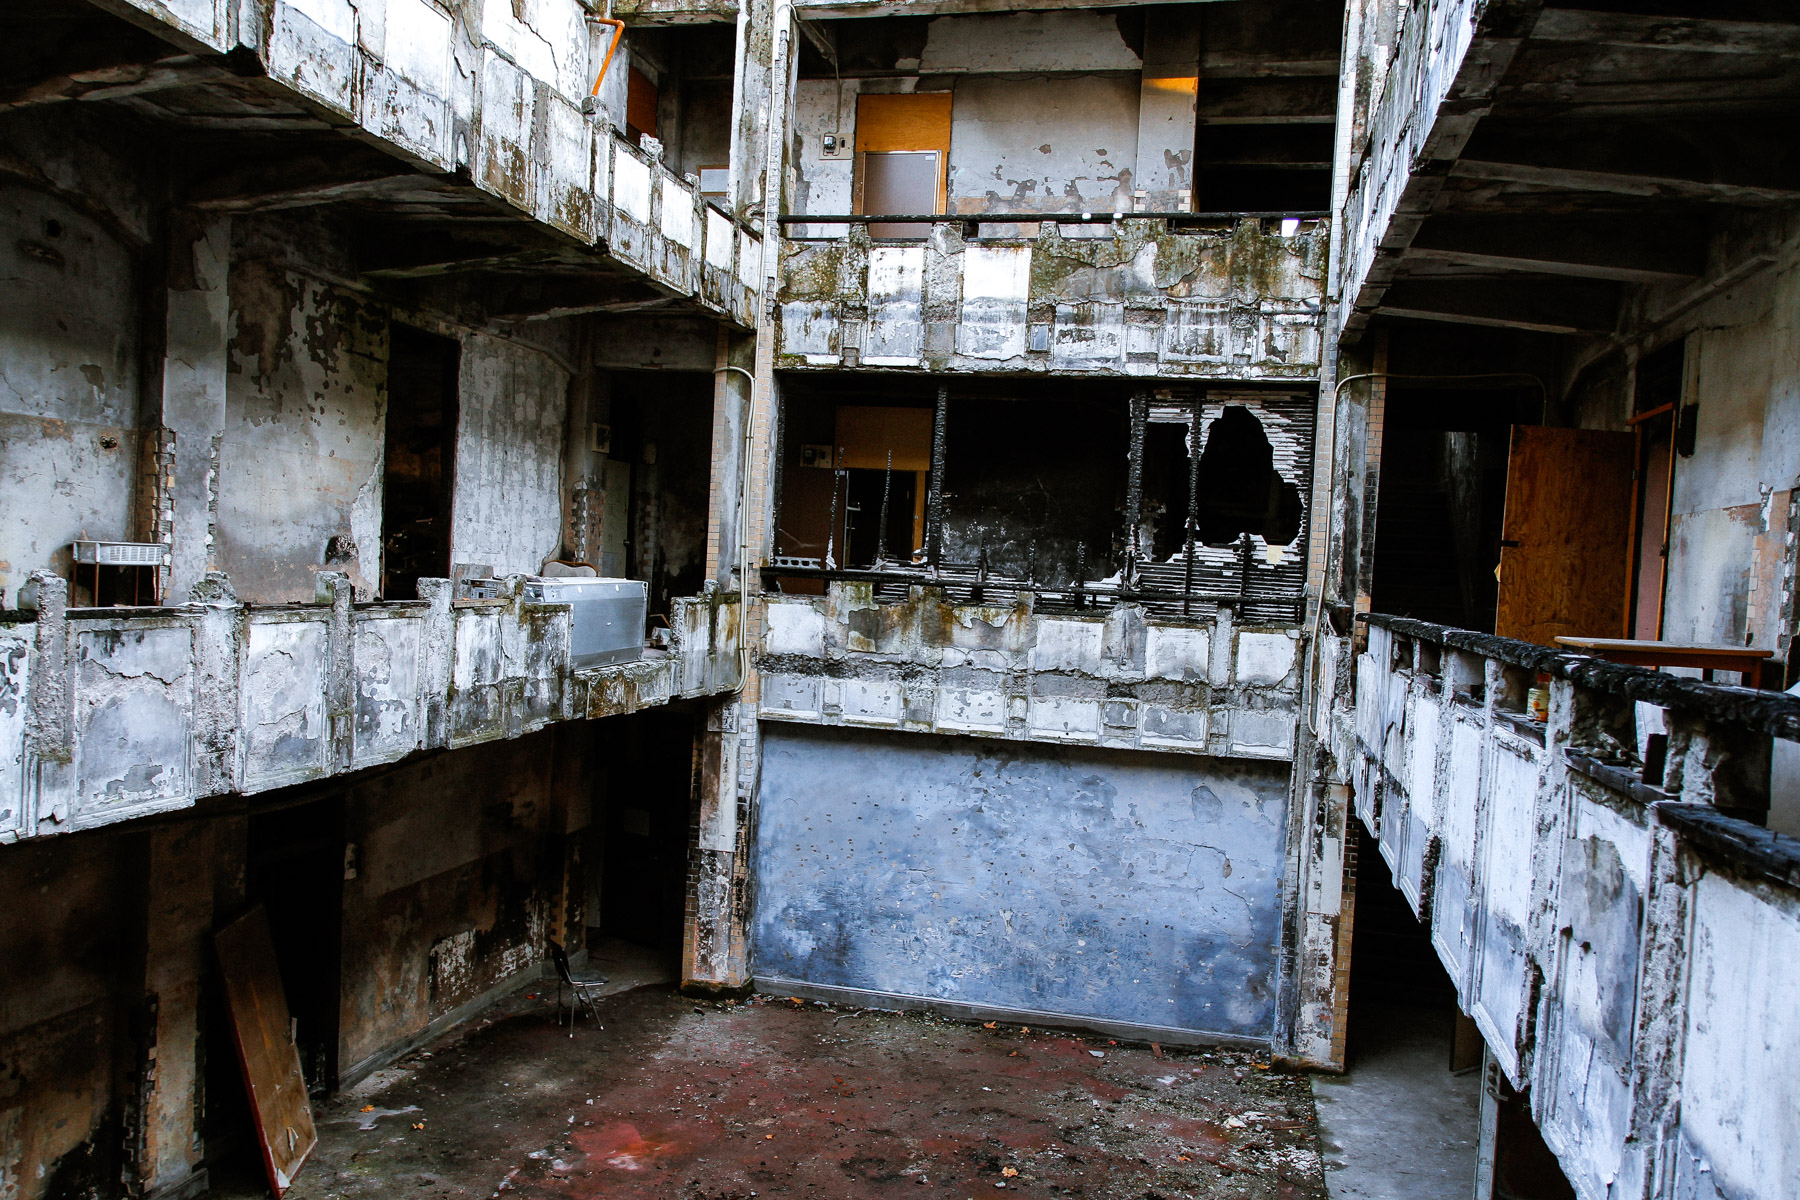 Seika Dormitory - Haikyo: Abandoned Japan